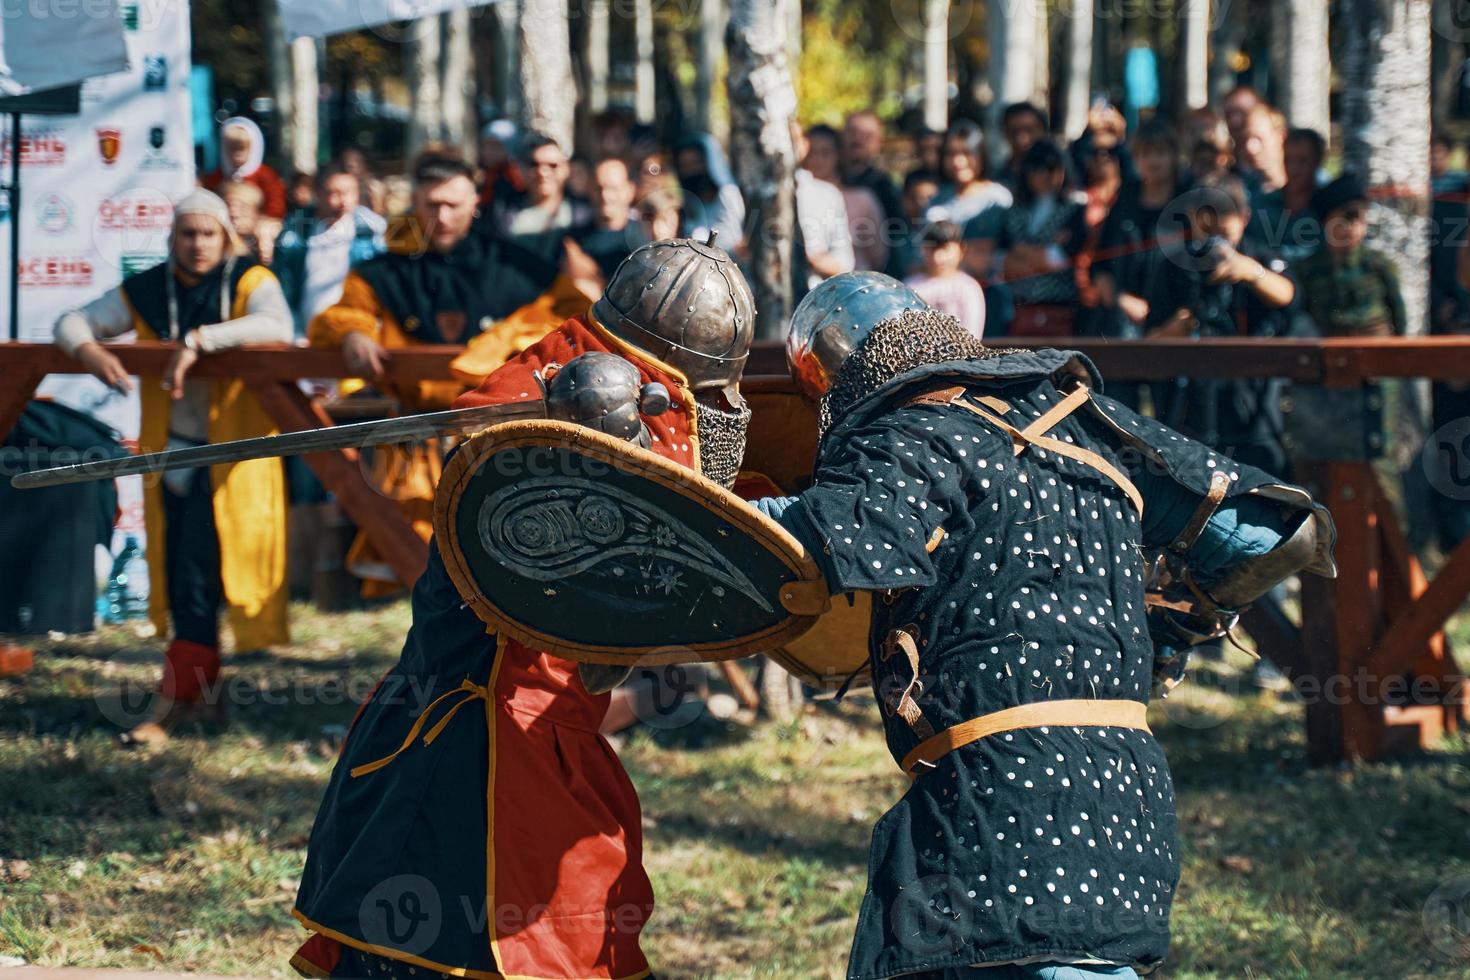 battaglia di cavalieri in armatura con spade a bishkek, kirghizistan 2019 foto